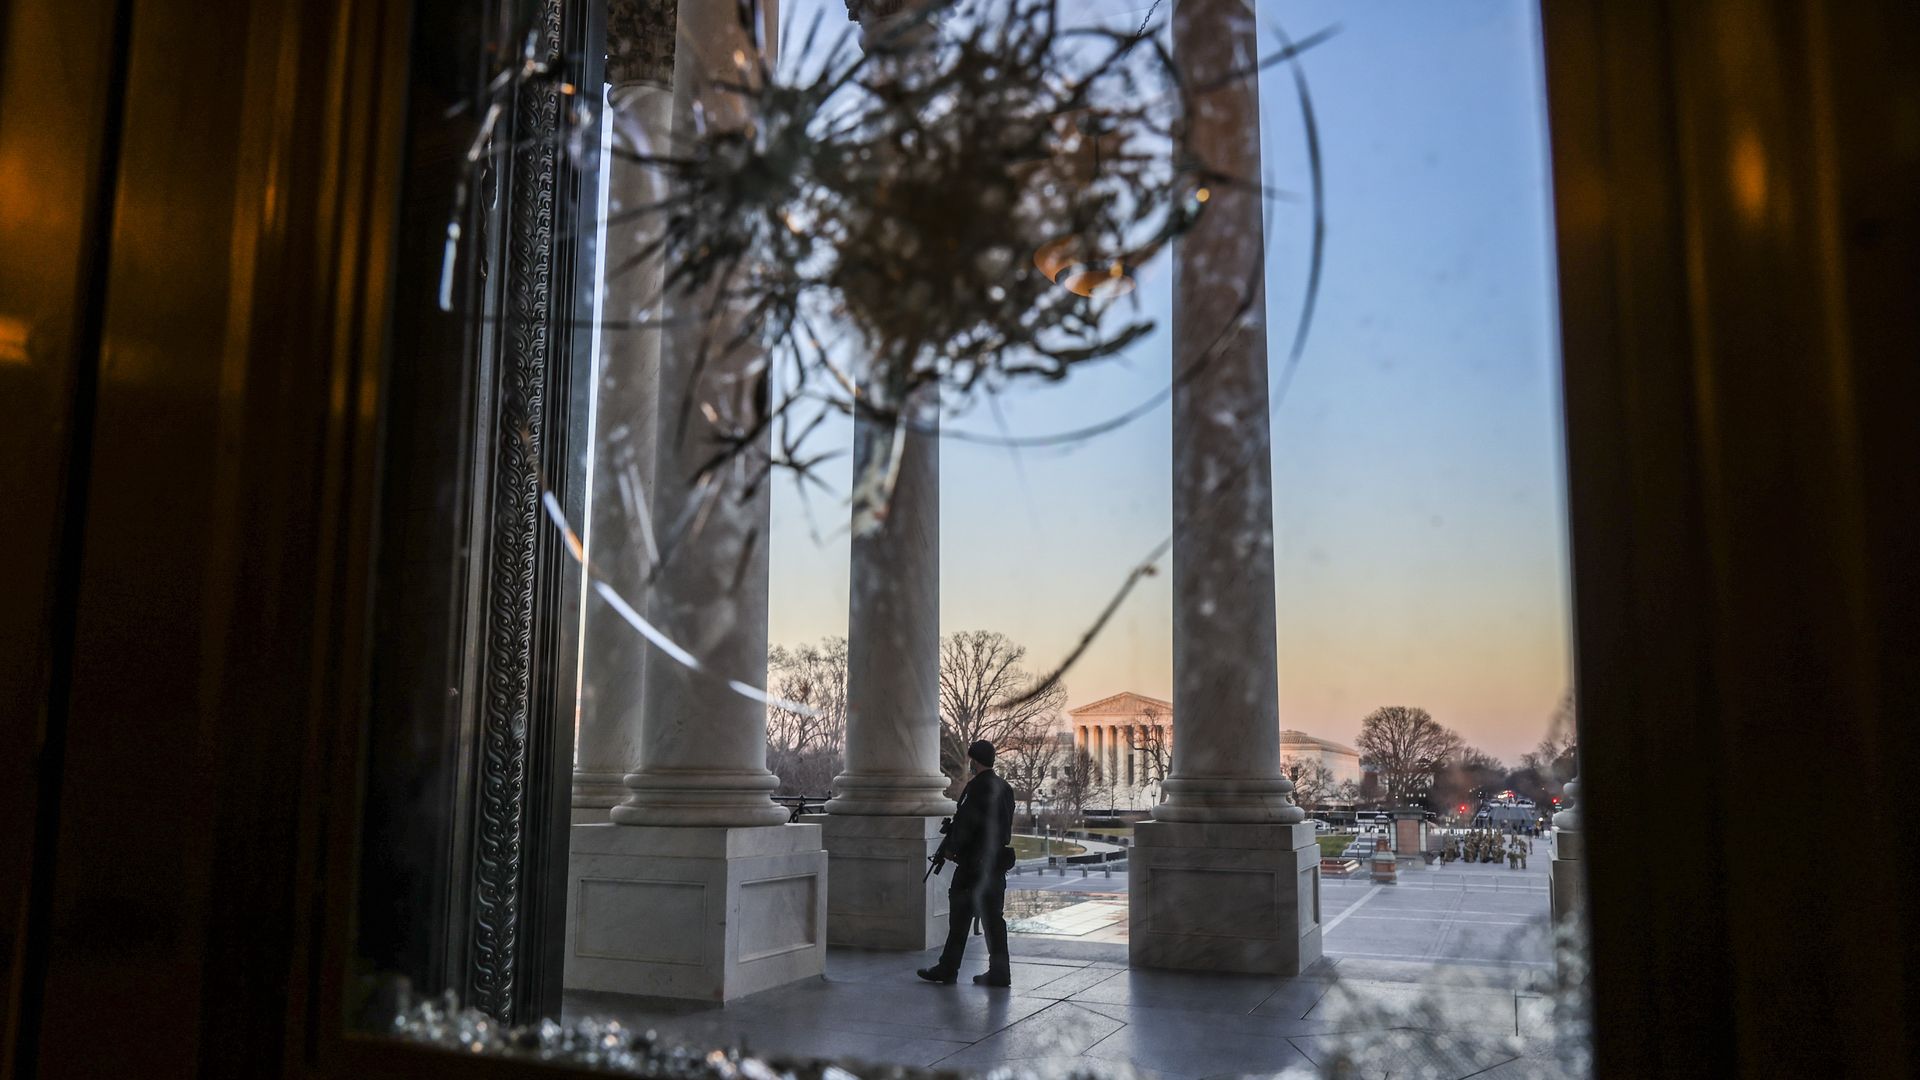 The Supreme Court is seen through a window broken in last week's assault on the U.S. Capitol.